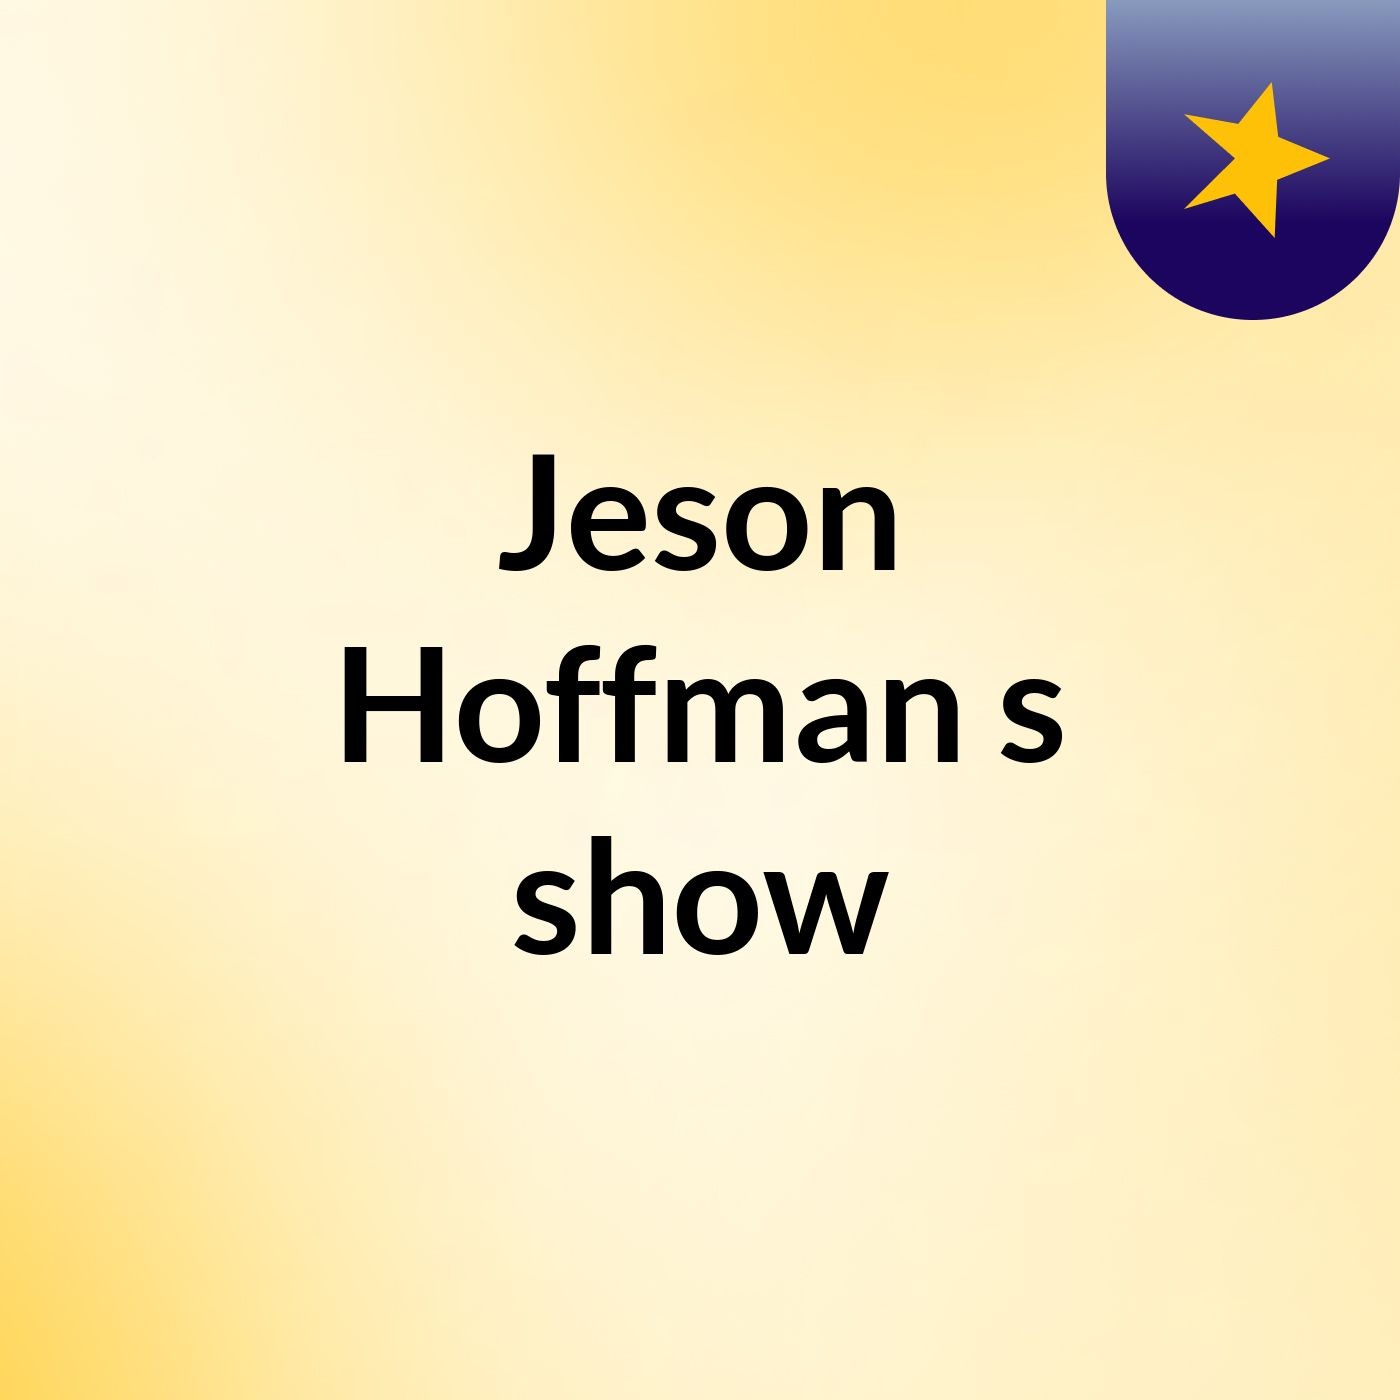 Jeson Hoffman's show